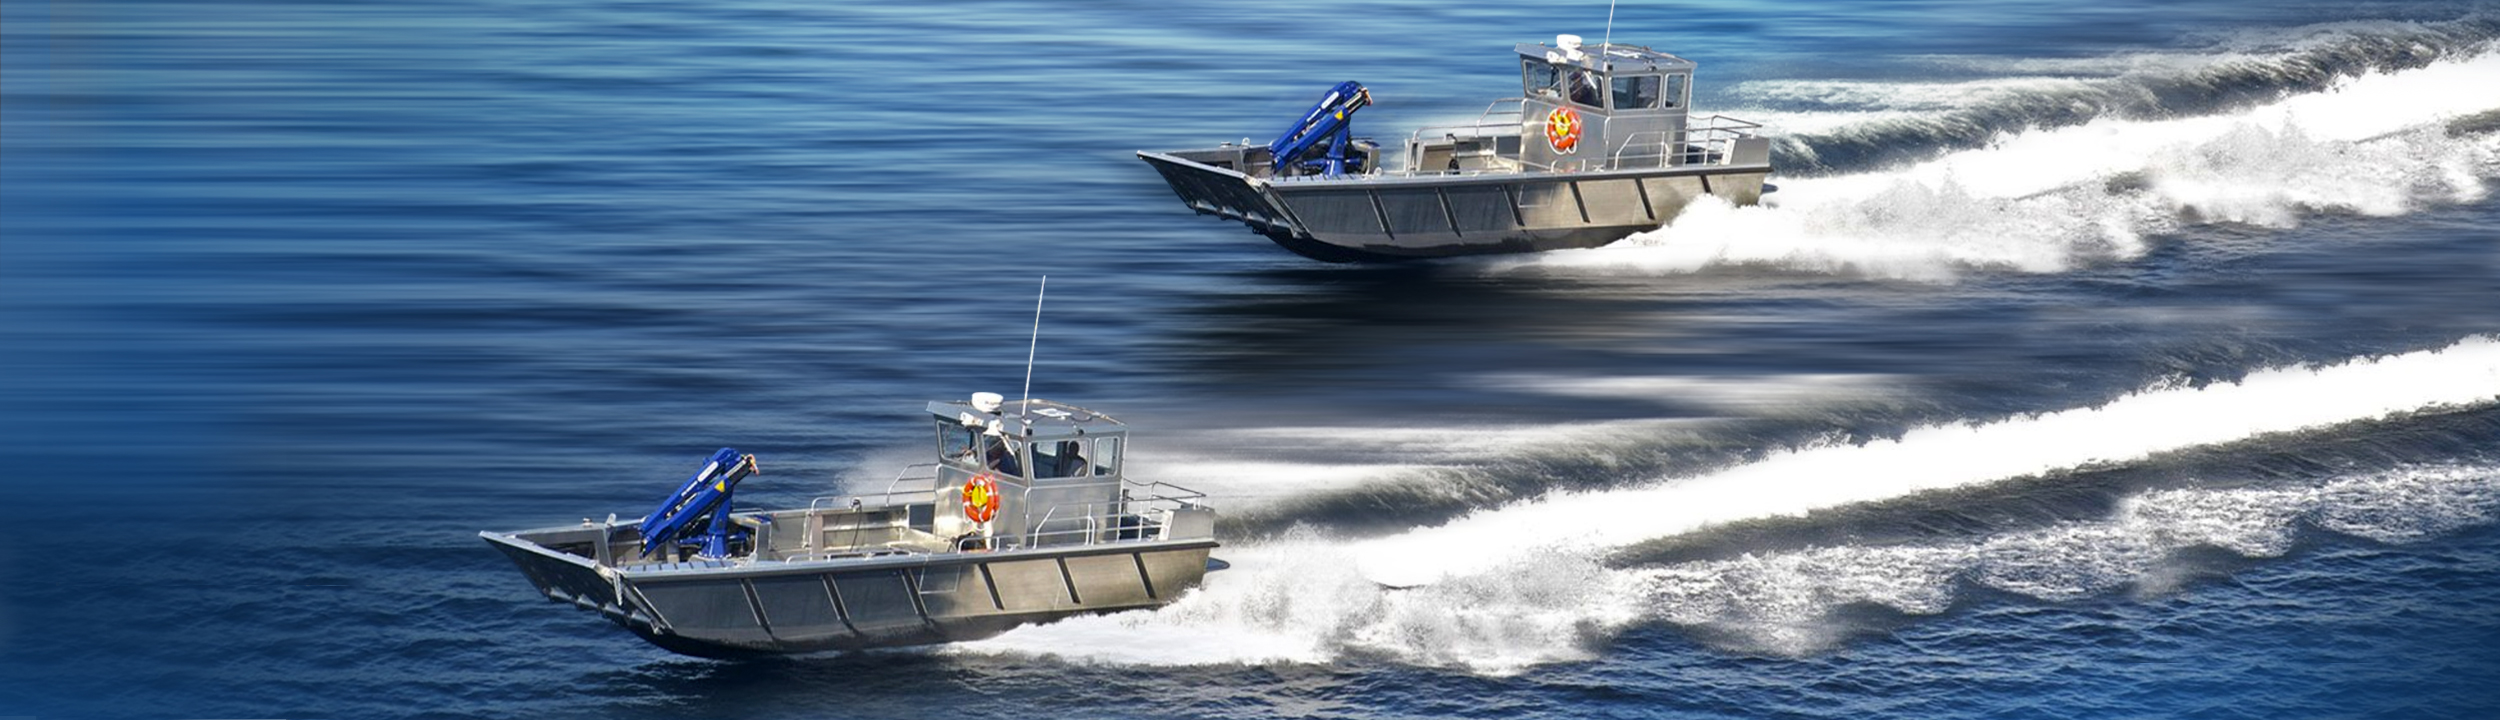 Landing craft - Welded aluminum work boats